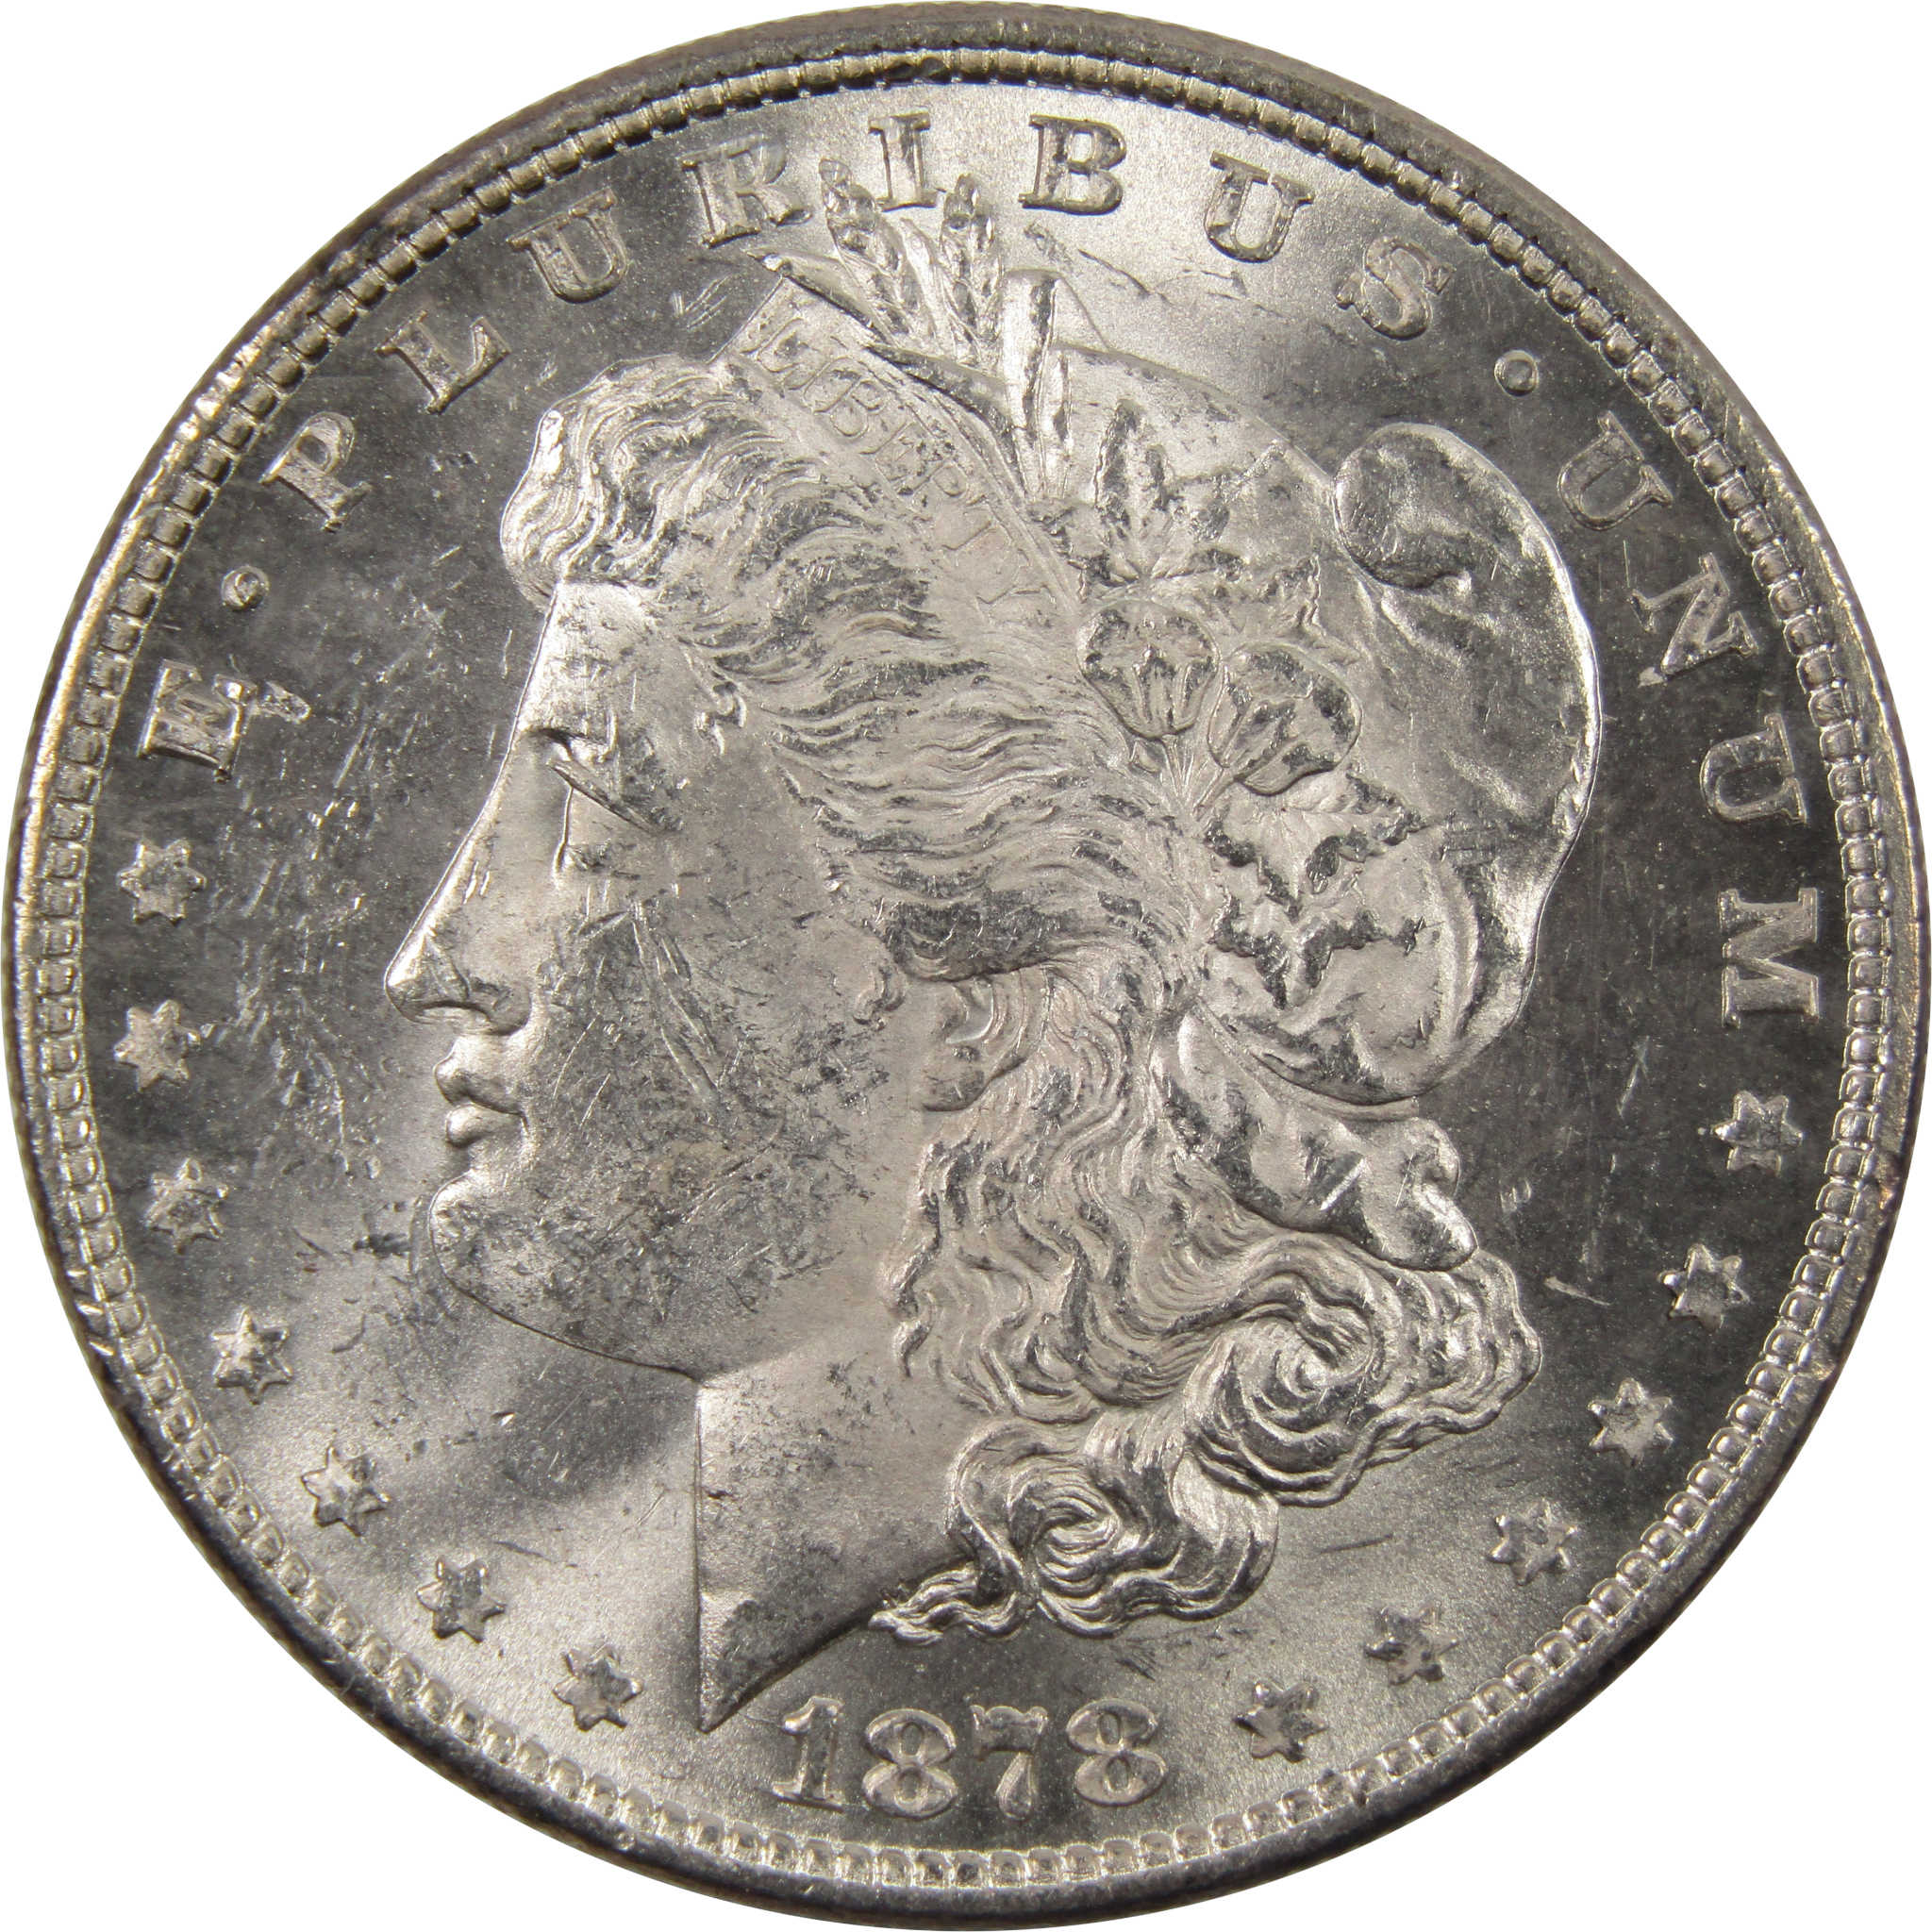 1878 8TF Morgan Dollar BU Uncirculated Silver $1 Coin SKU:I10213 - Morgan coin - Morgan silver dollar - Morgan silver dollar for sale - Profile Coins &amp; Collectibles